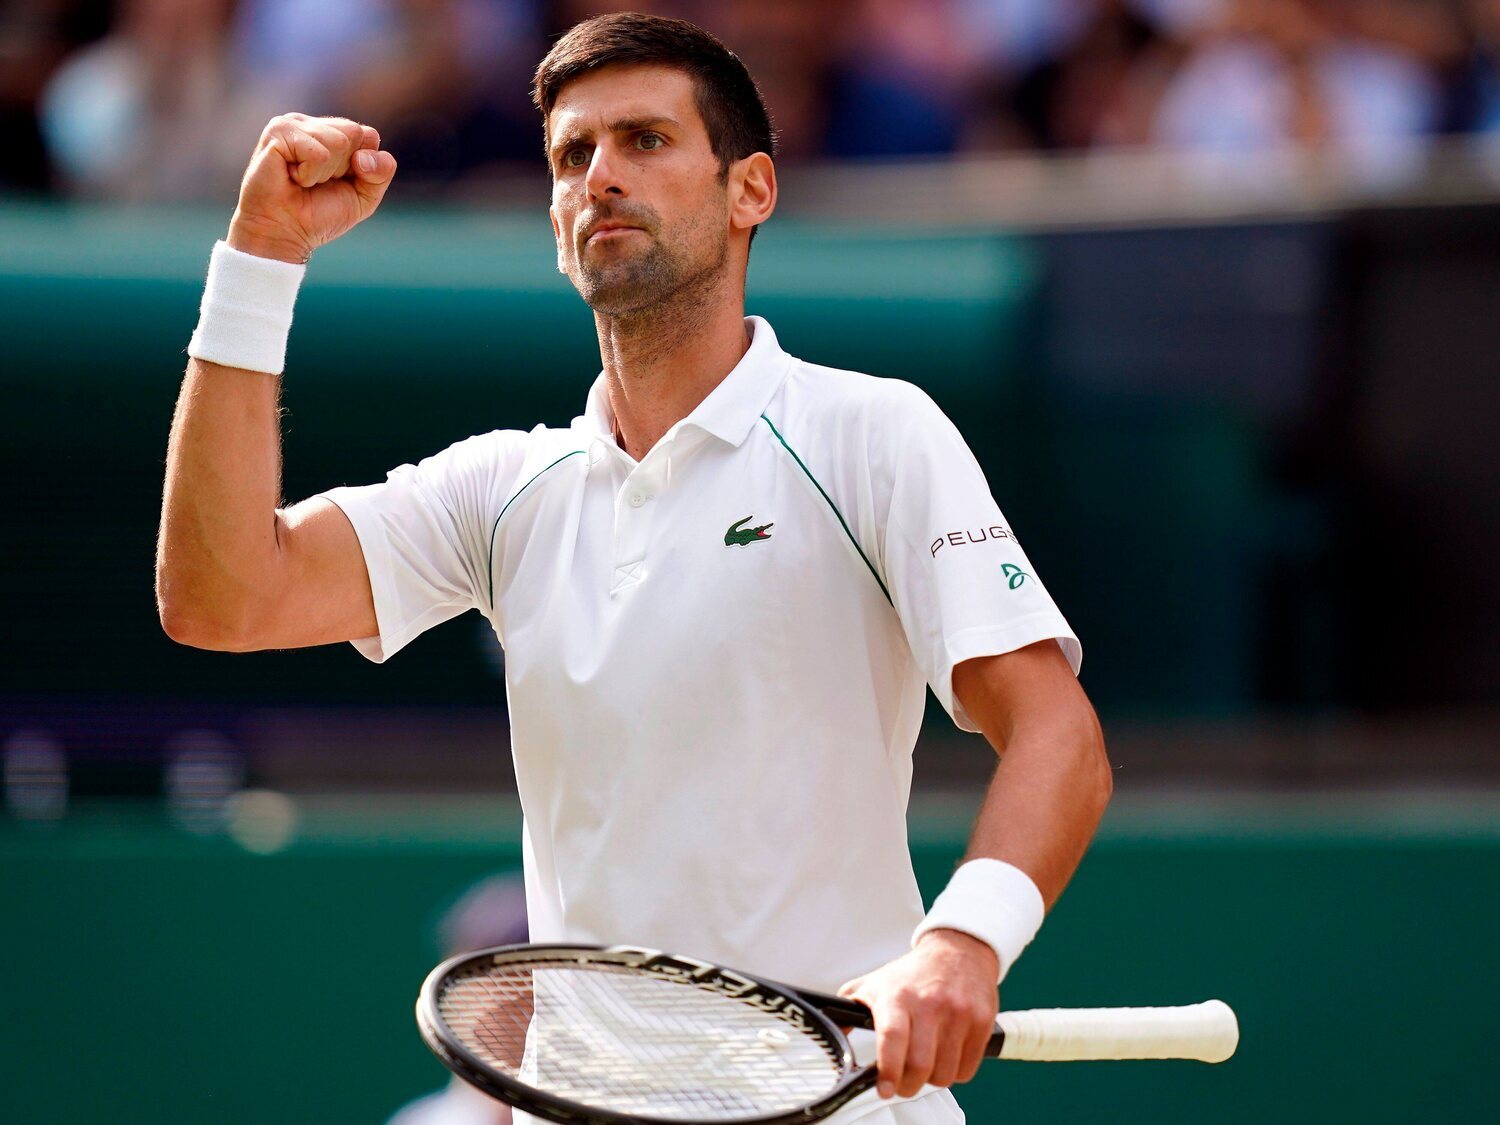 El juez libera a Novak Djokovic y podrá jugar el Open de Australia